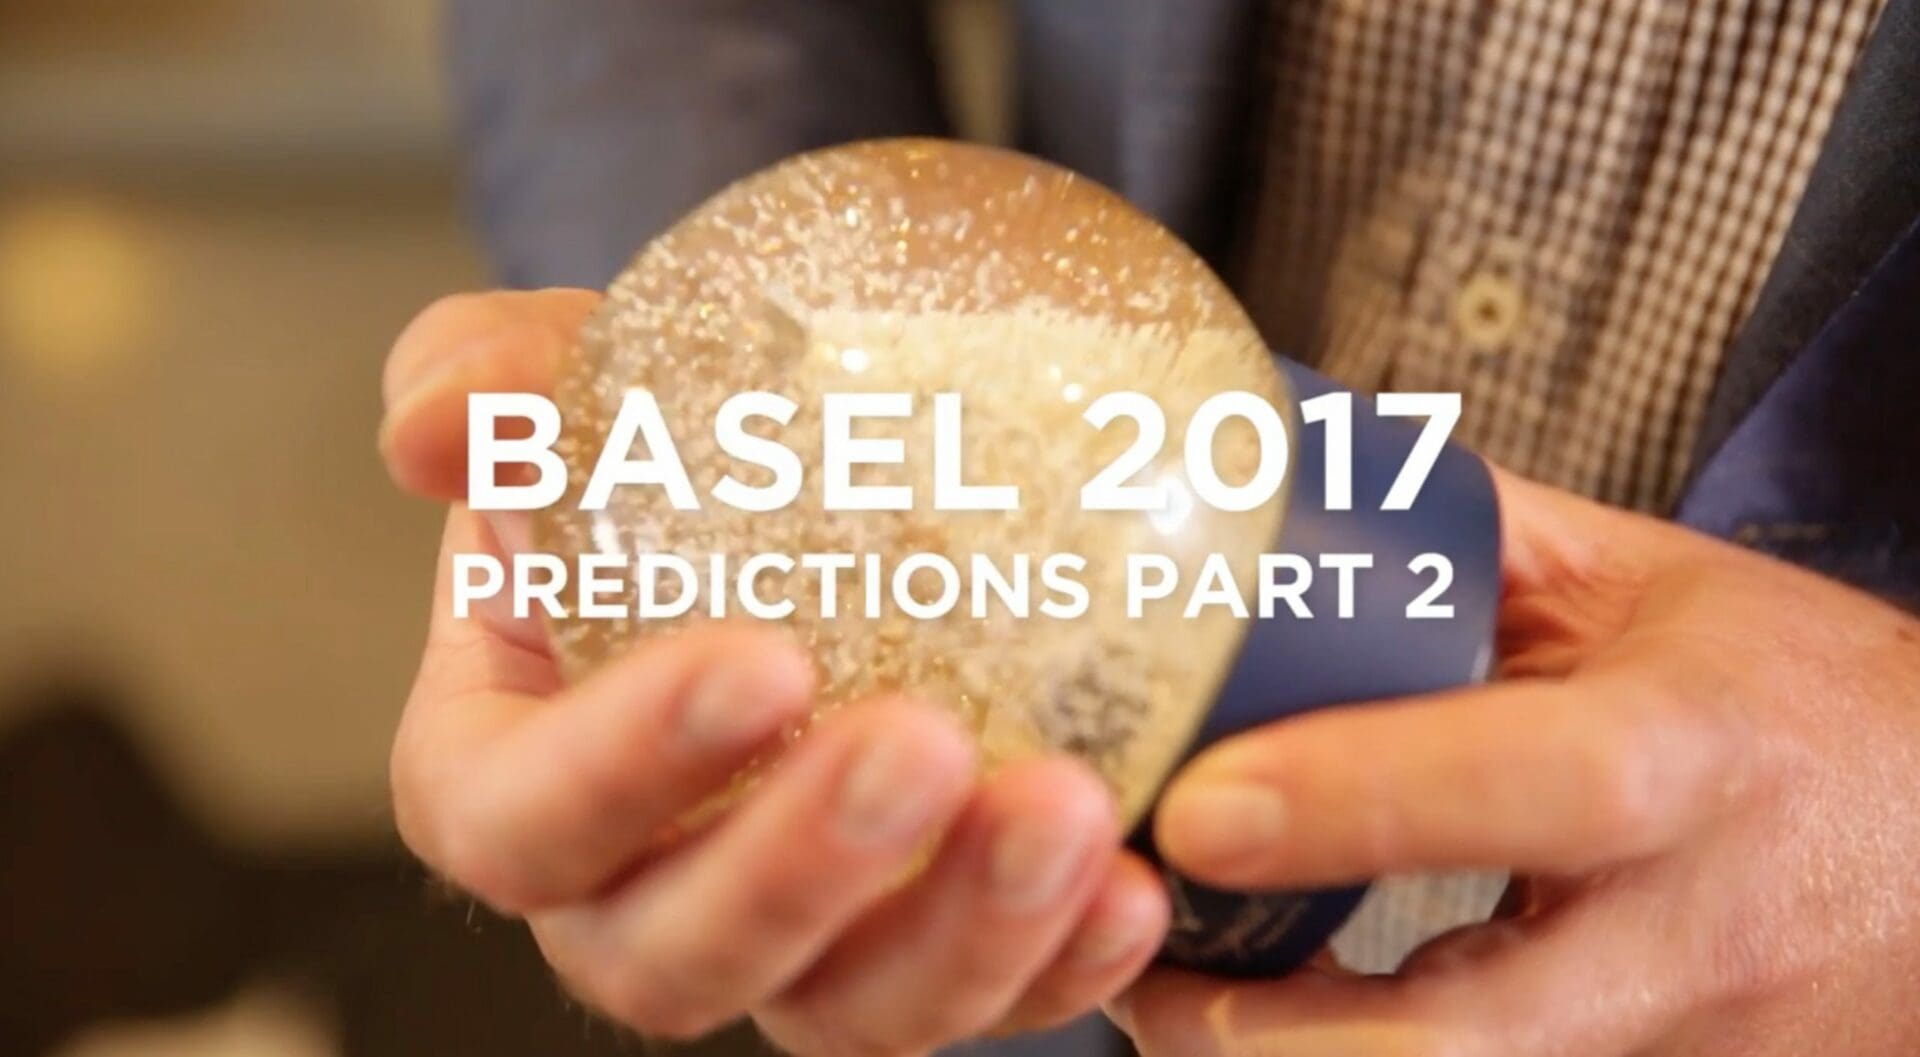 VIDEO: Our Basel 2017 predictions Part 2, including Seiko, Grand Seiko and Rolex